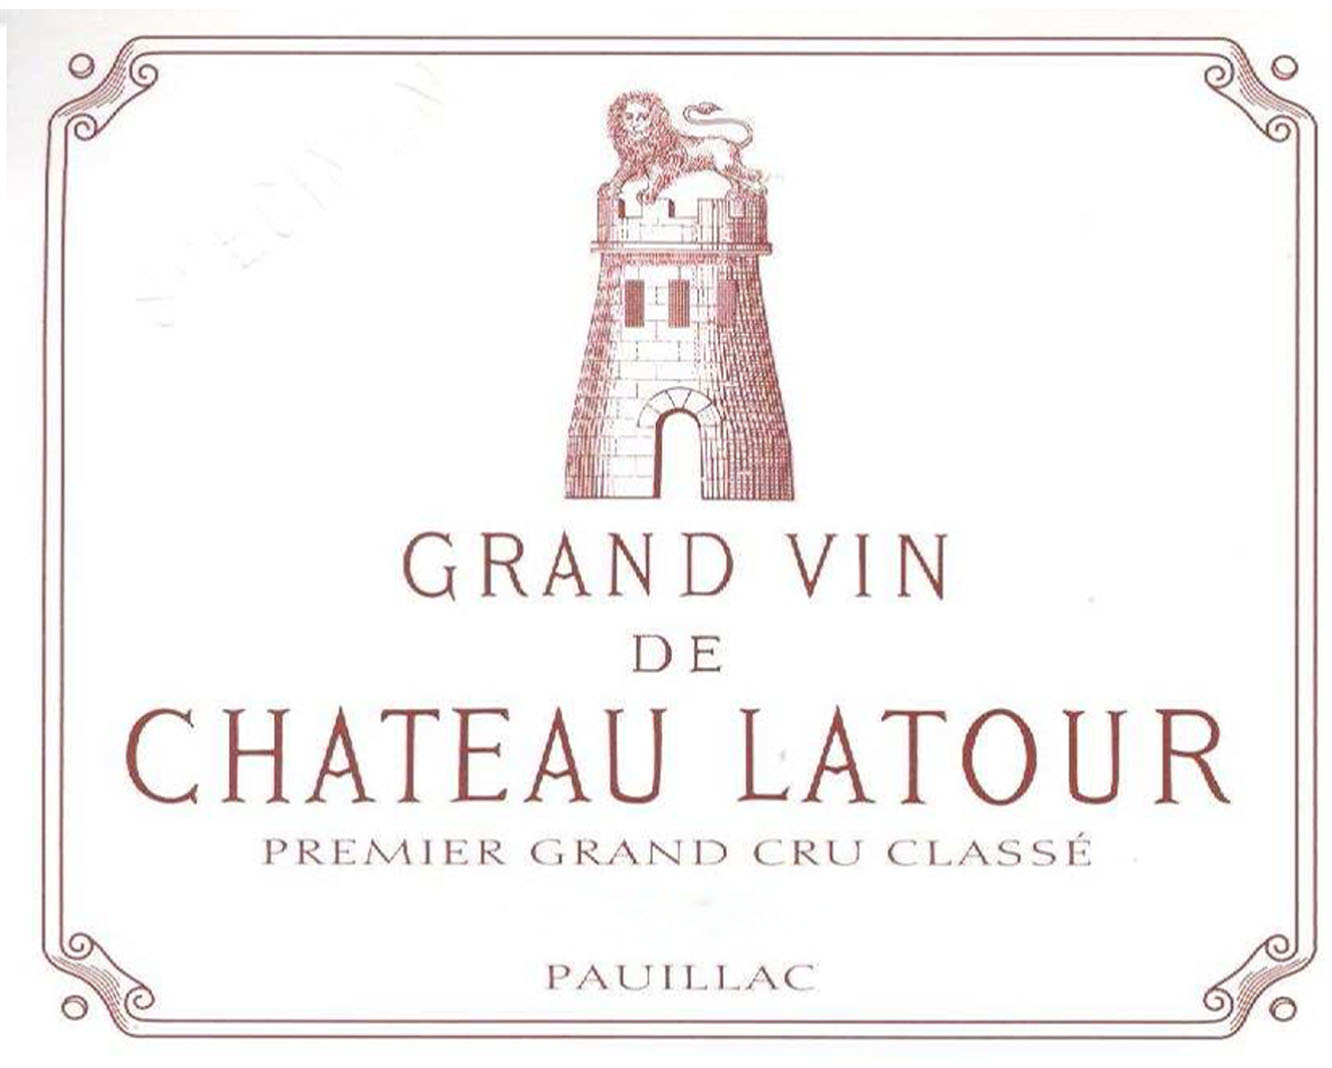 Chateau Latour label